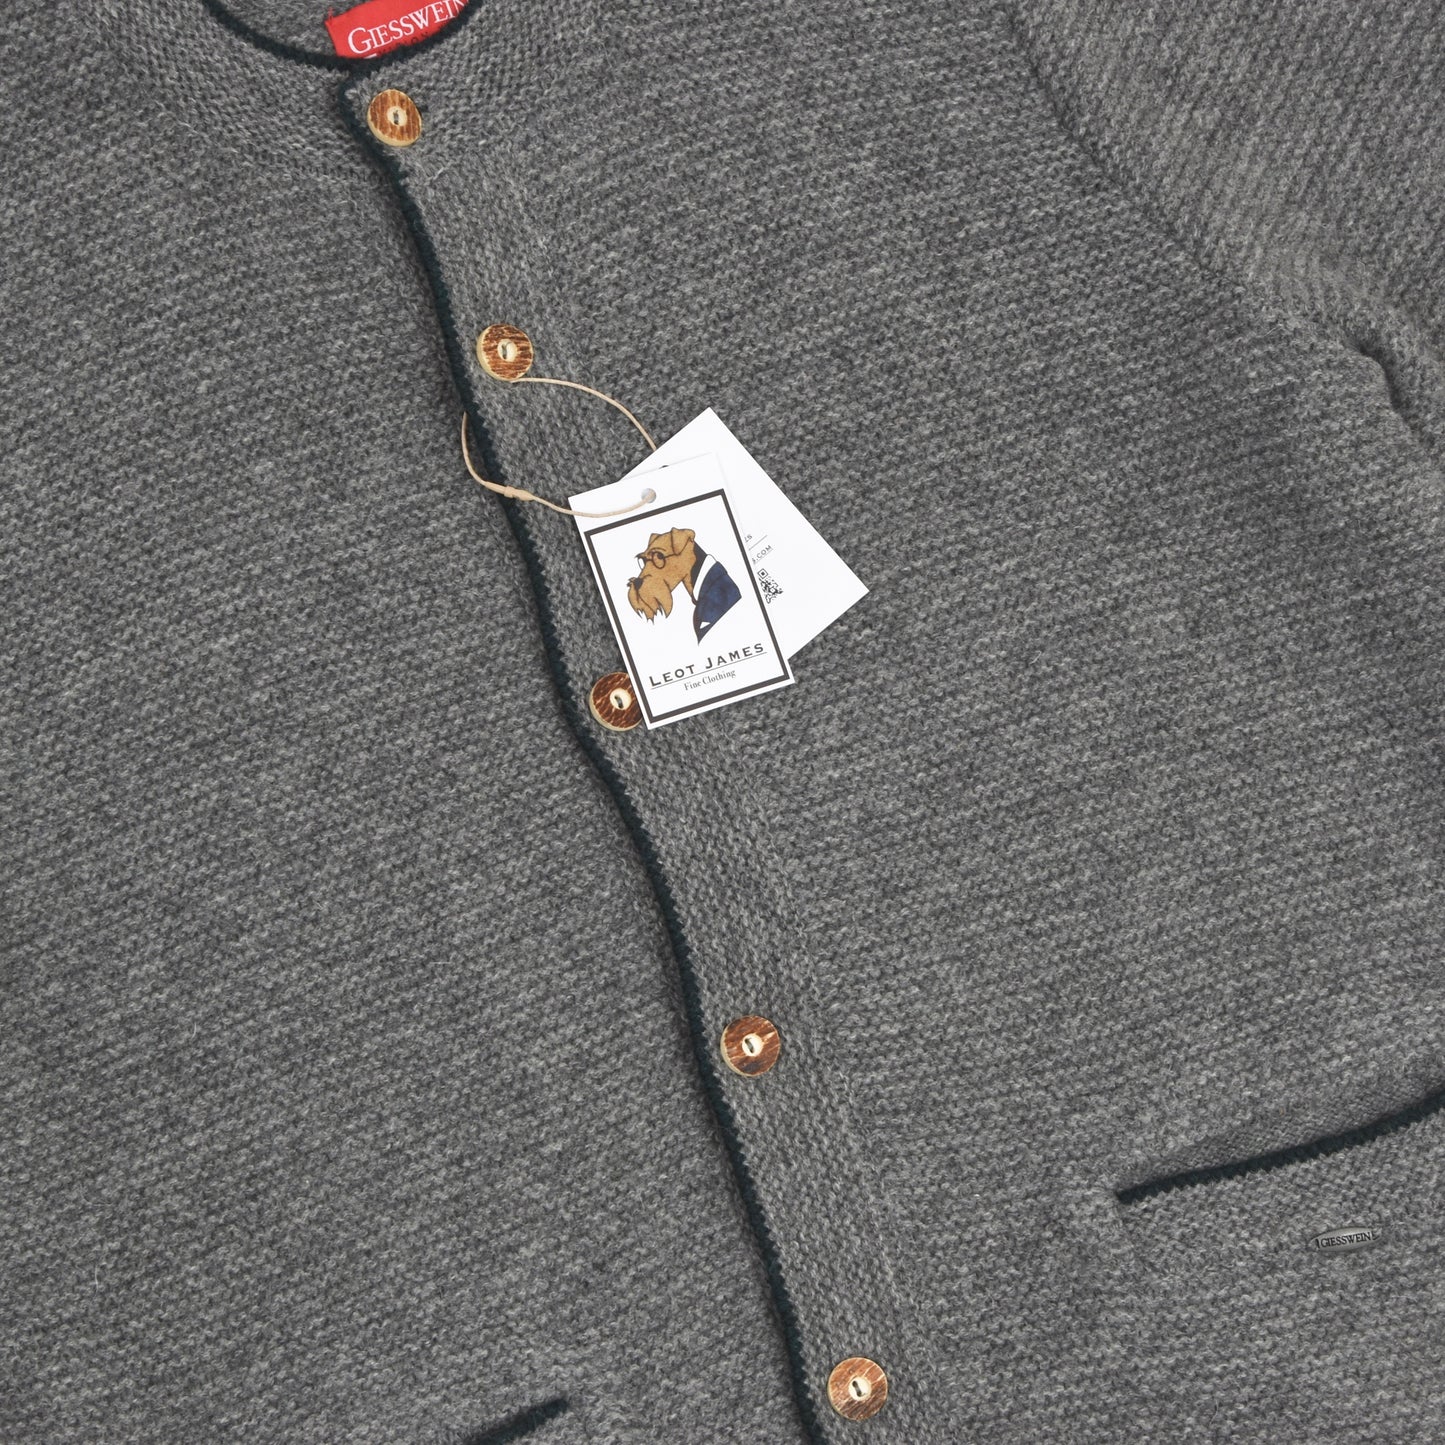 Giesswein Wool Walkloden Cardigan Sweater Size 52 - Grey